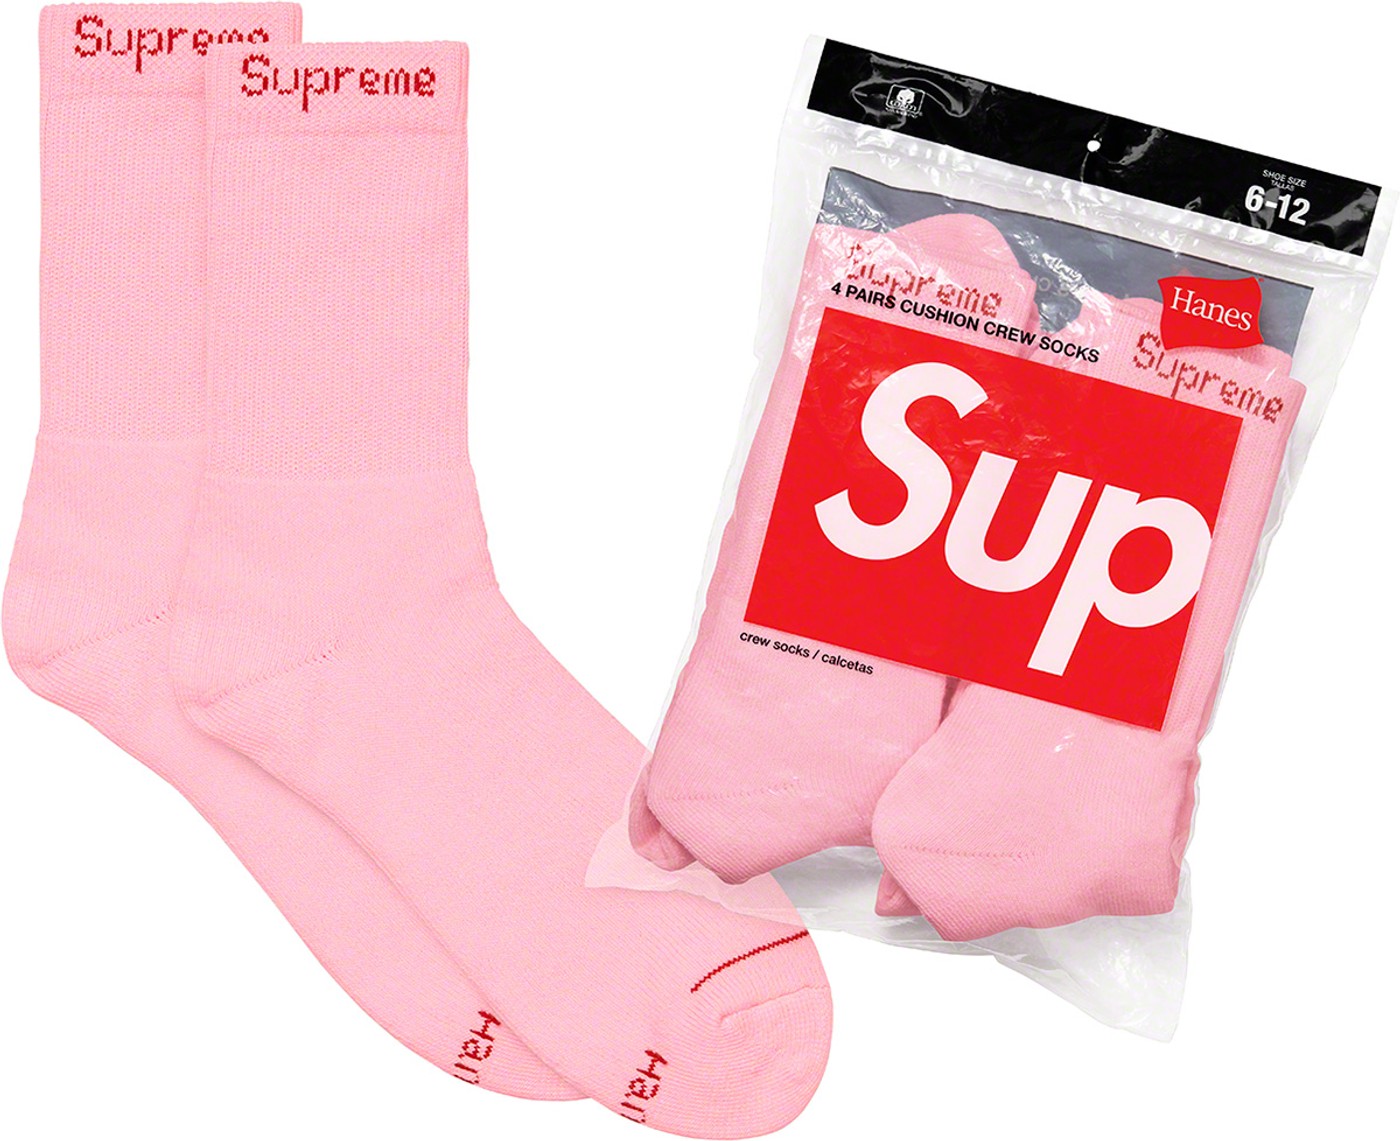 Supreme®/Hanes® Boxer Briefs Pink S, M Brand New All cotton